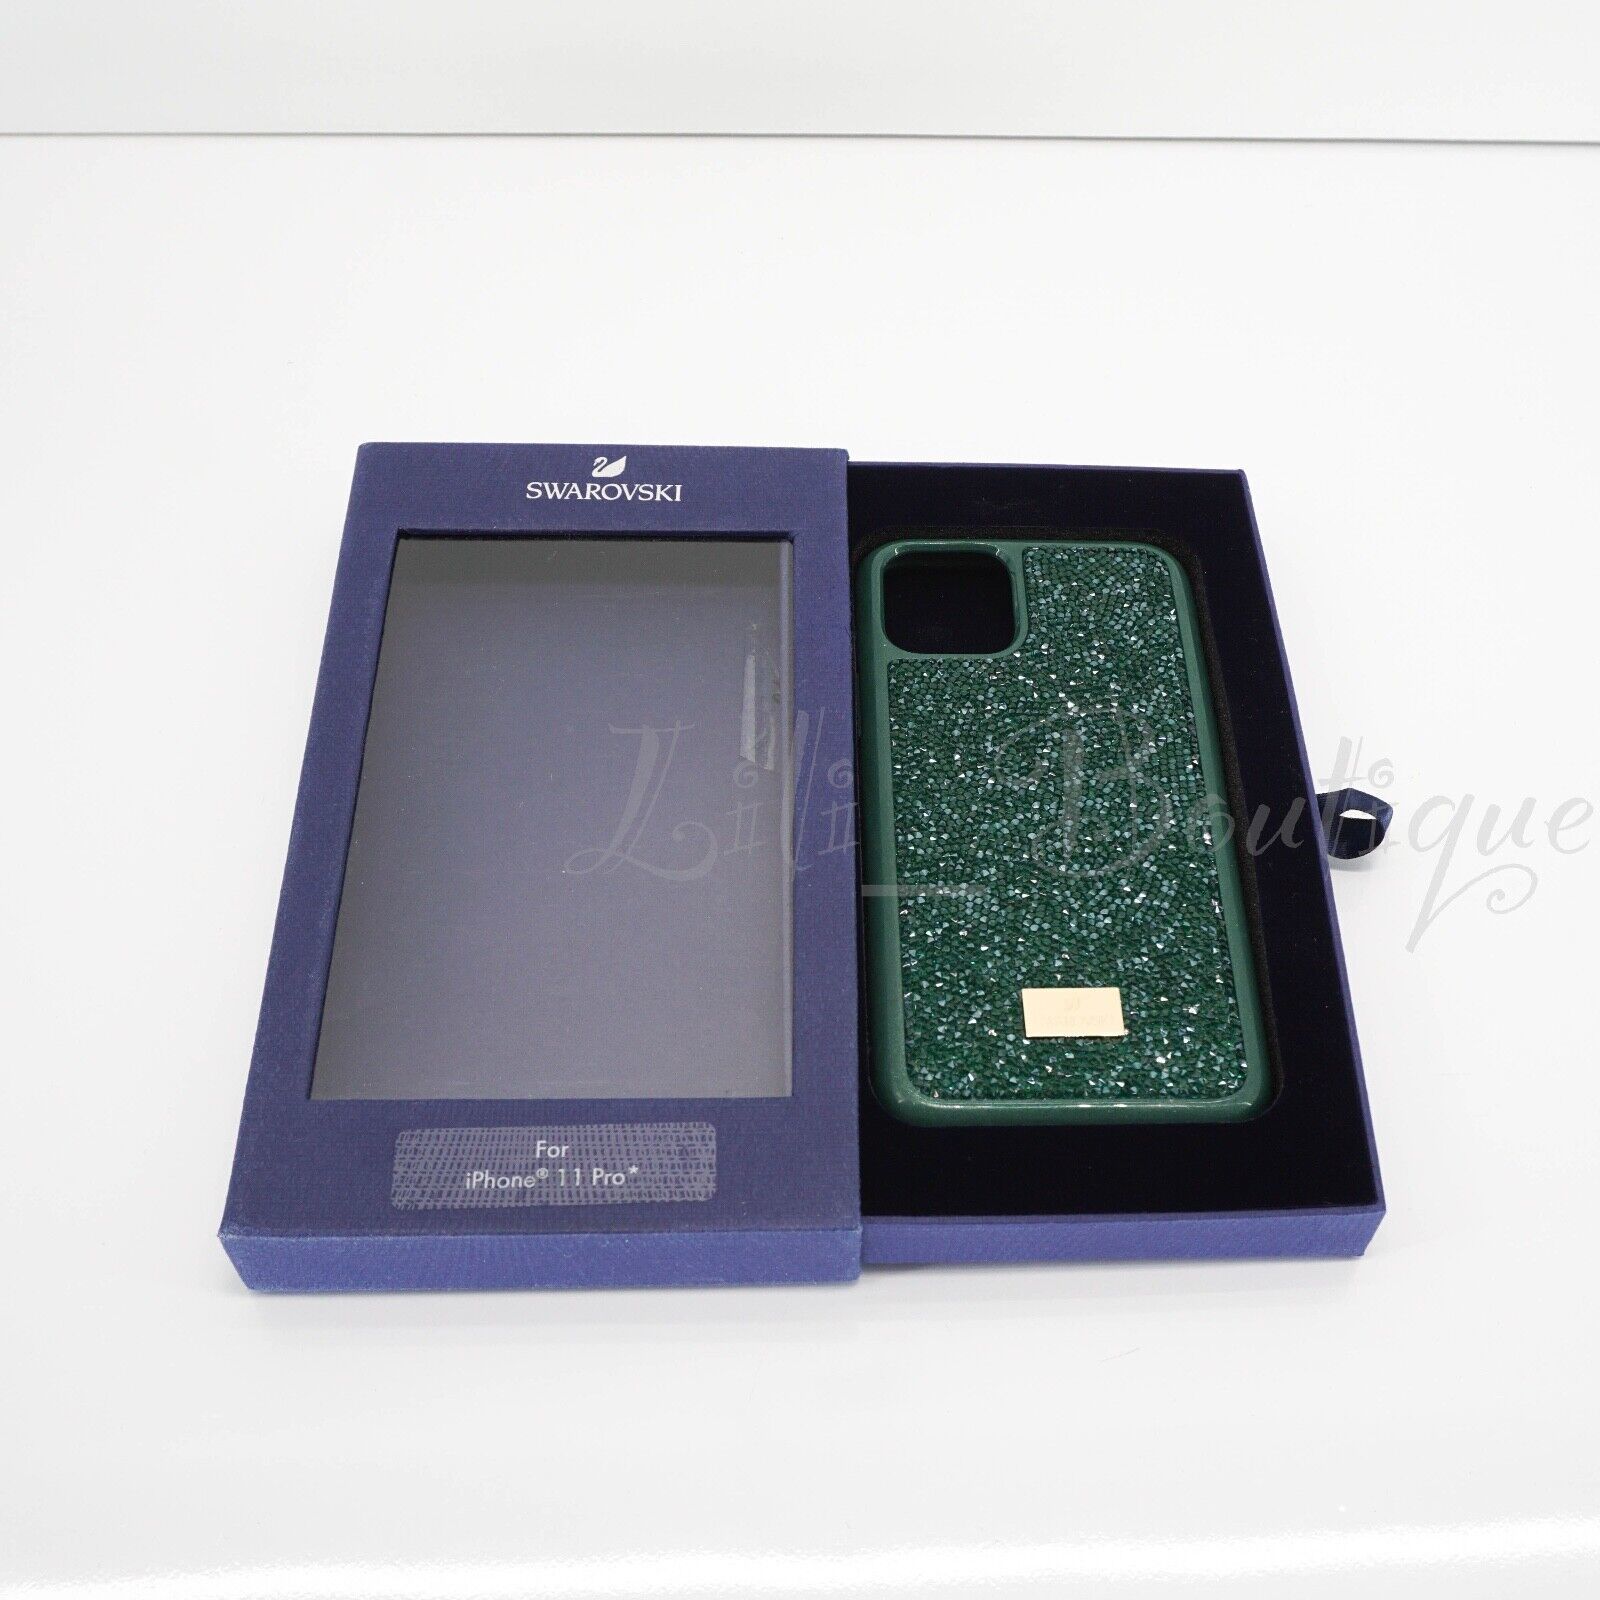 Primary image for NIB NewSwarovski 5549939 Glam Rock Smartphone Case Cover iPhone 11 Pro Green $79